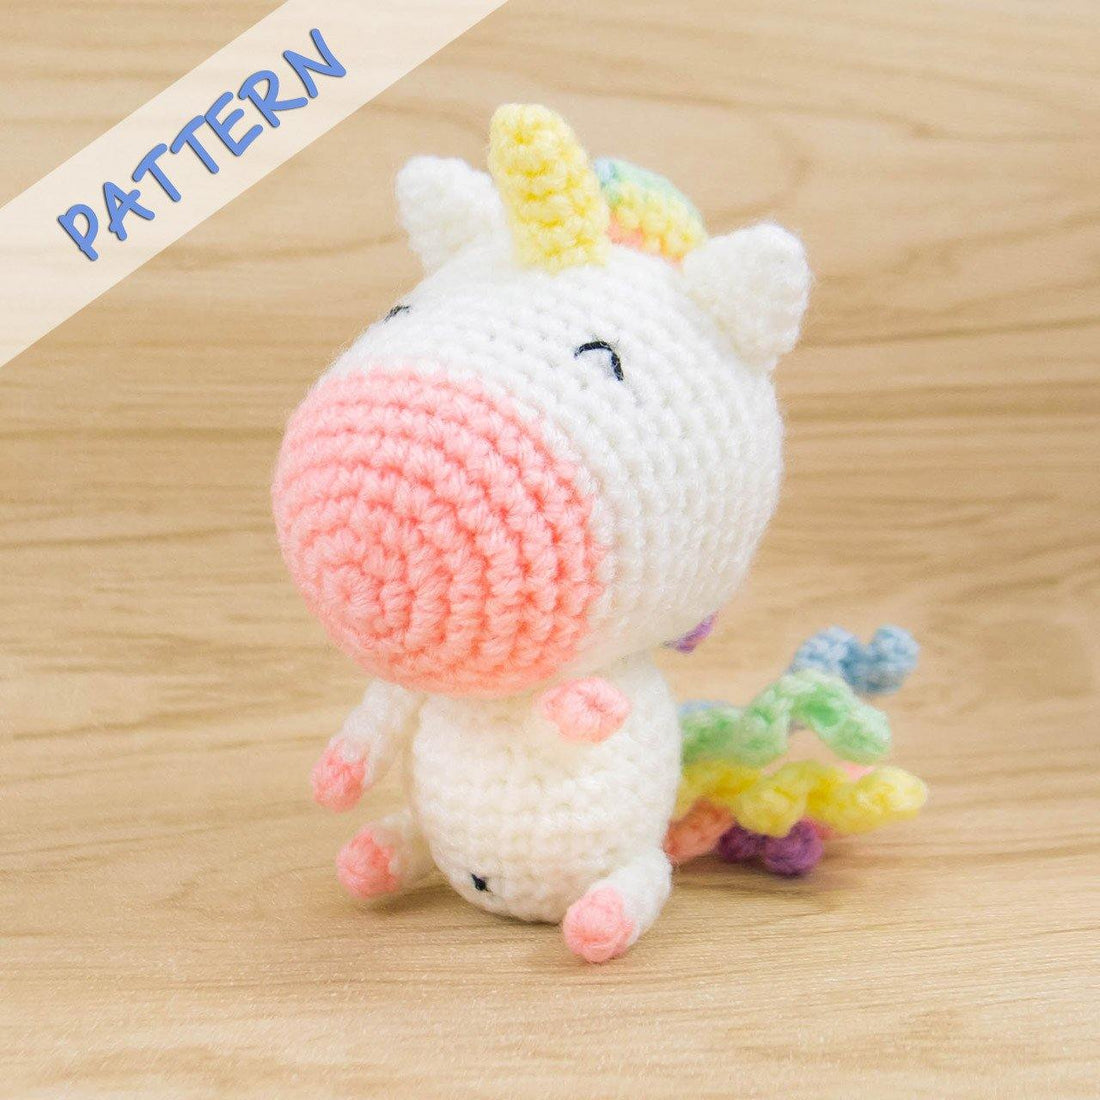 Unicorn Amigurumi Pattern Released! - Snacksies Handicraft